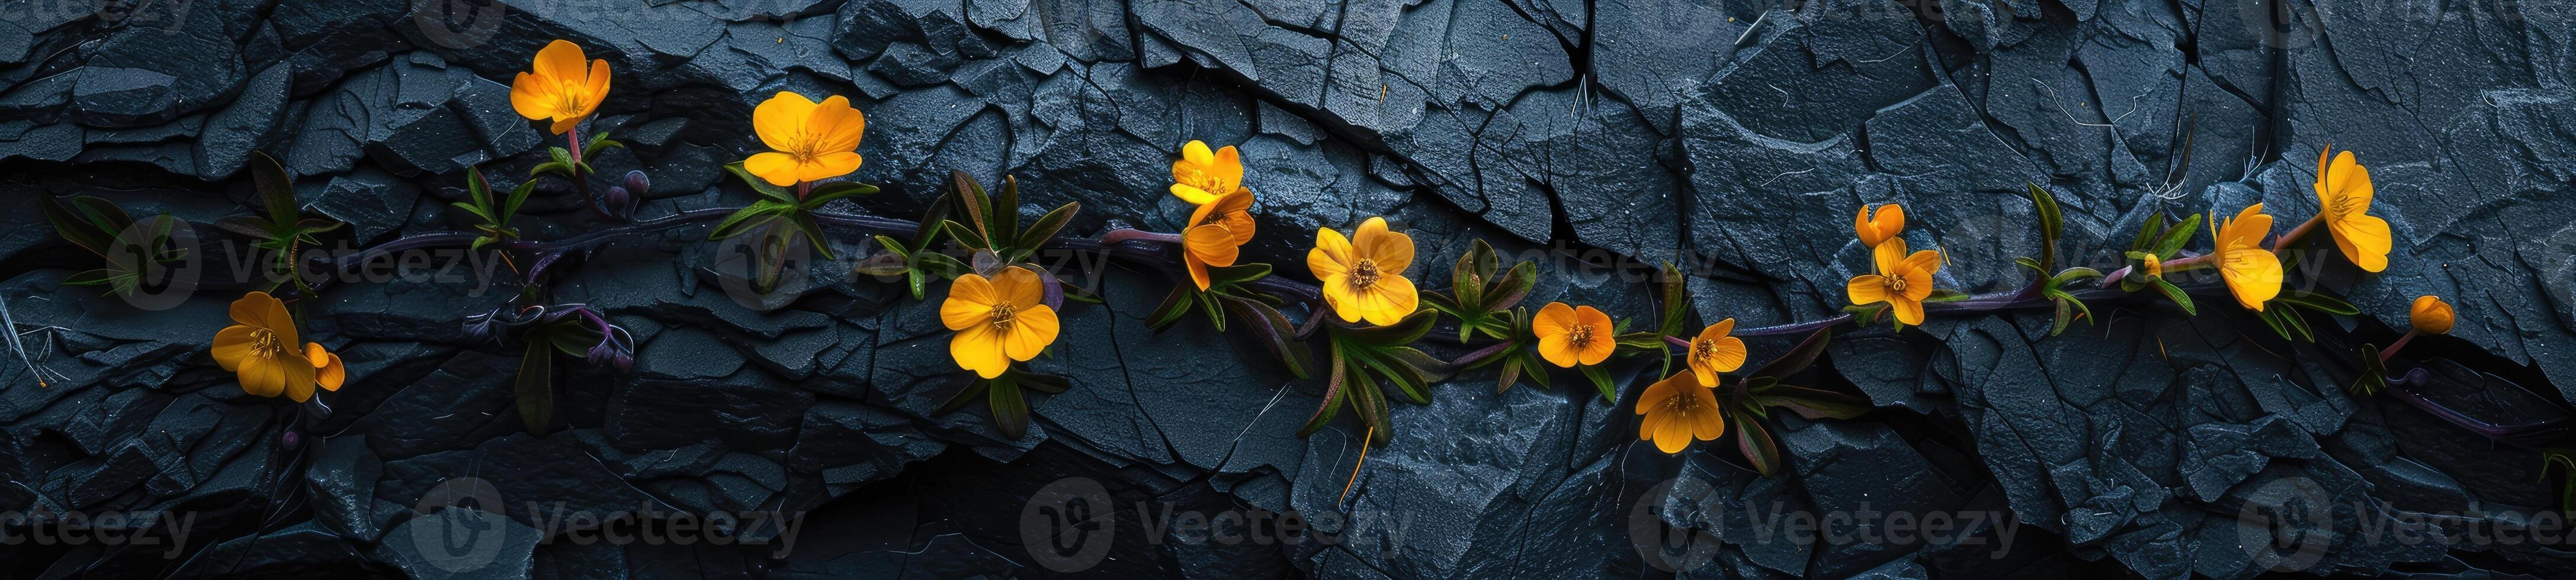 Abundance of Small Yellow Flowers on Dark Stone Background photo